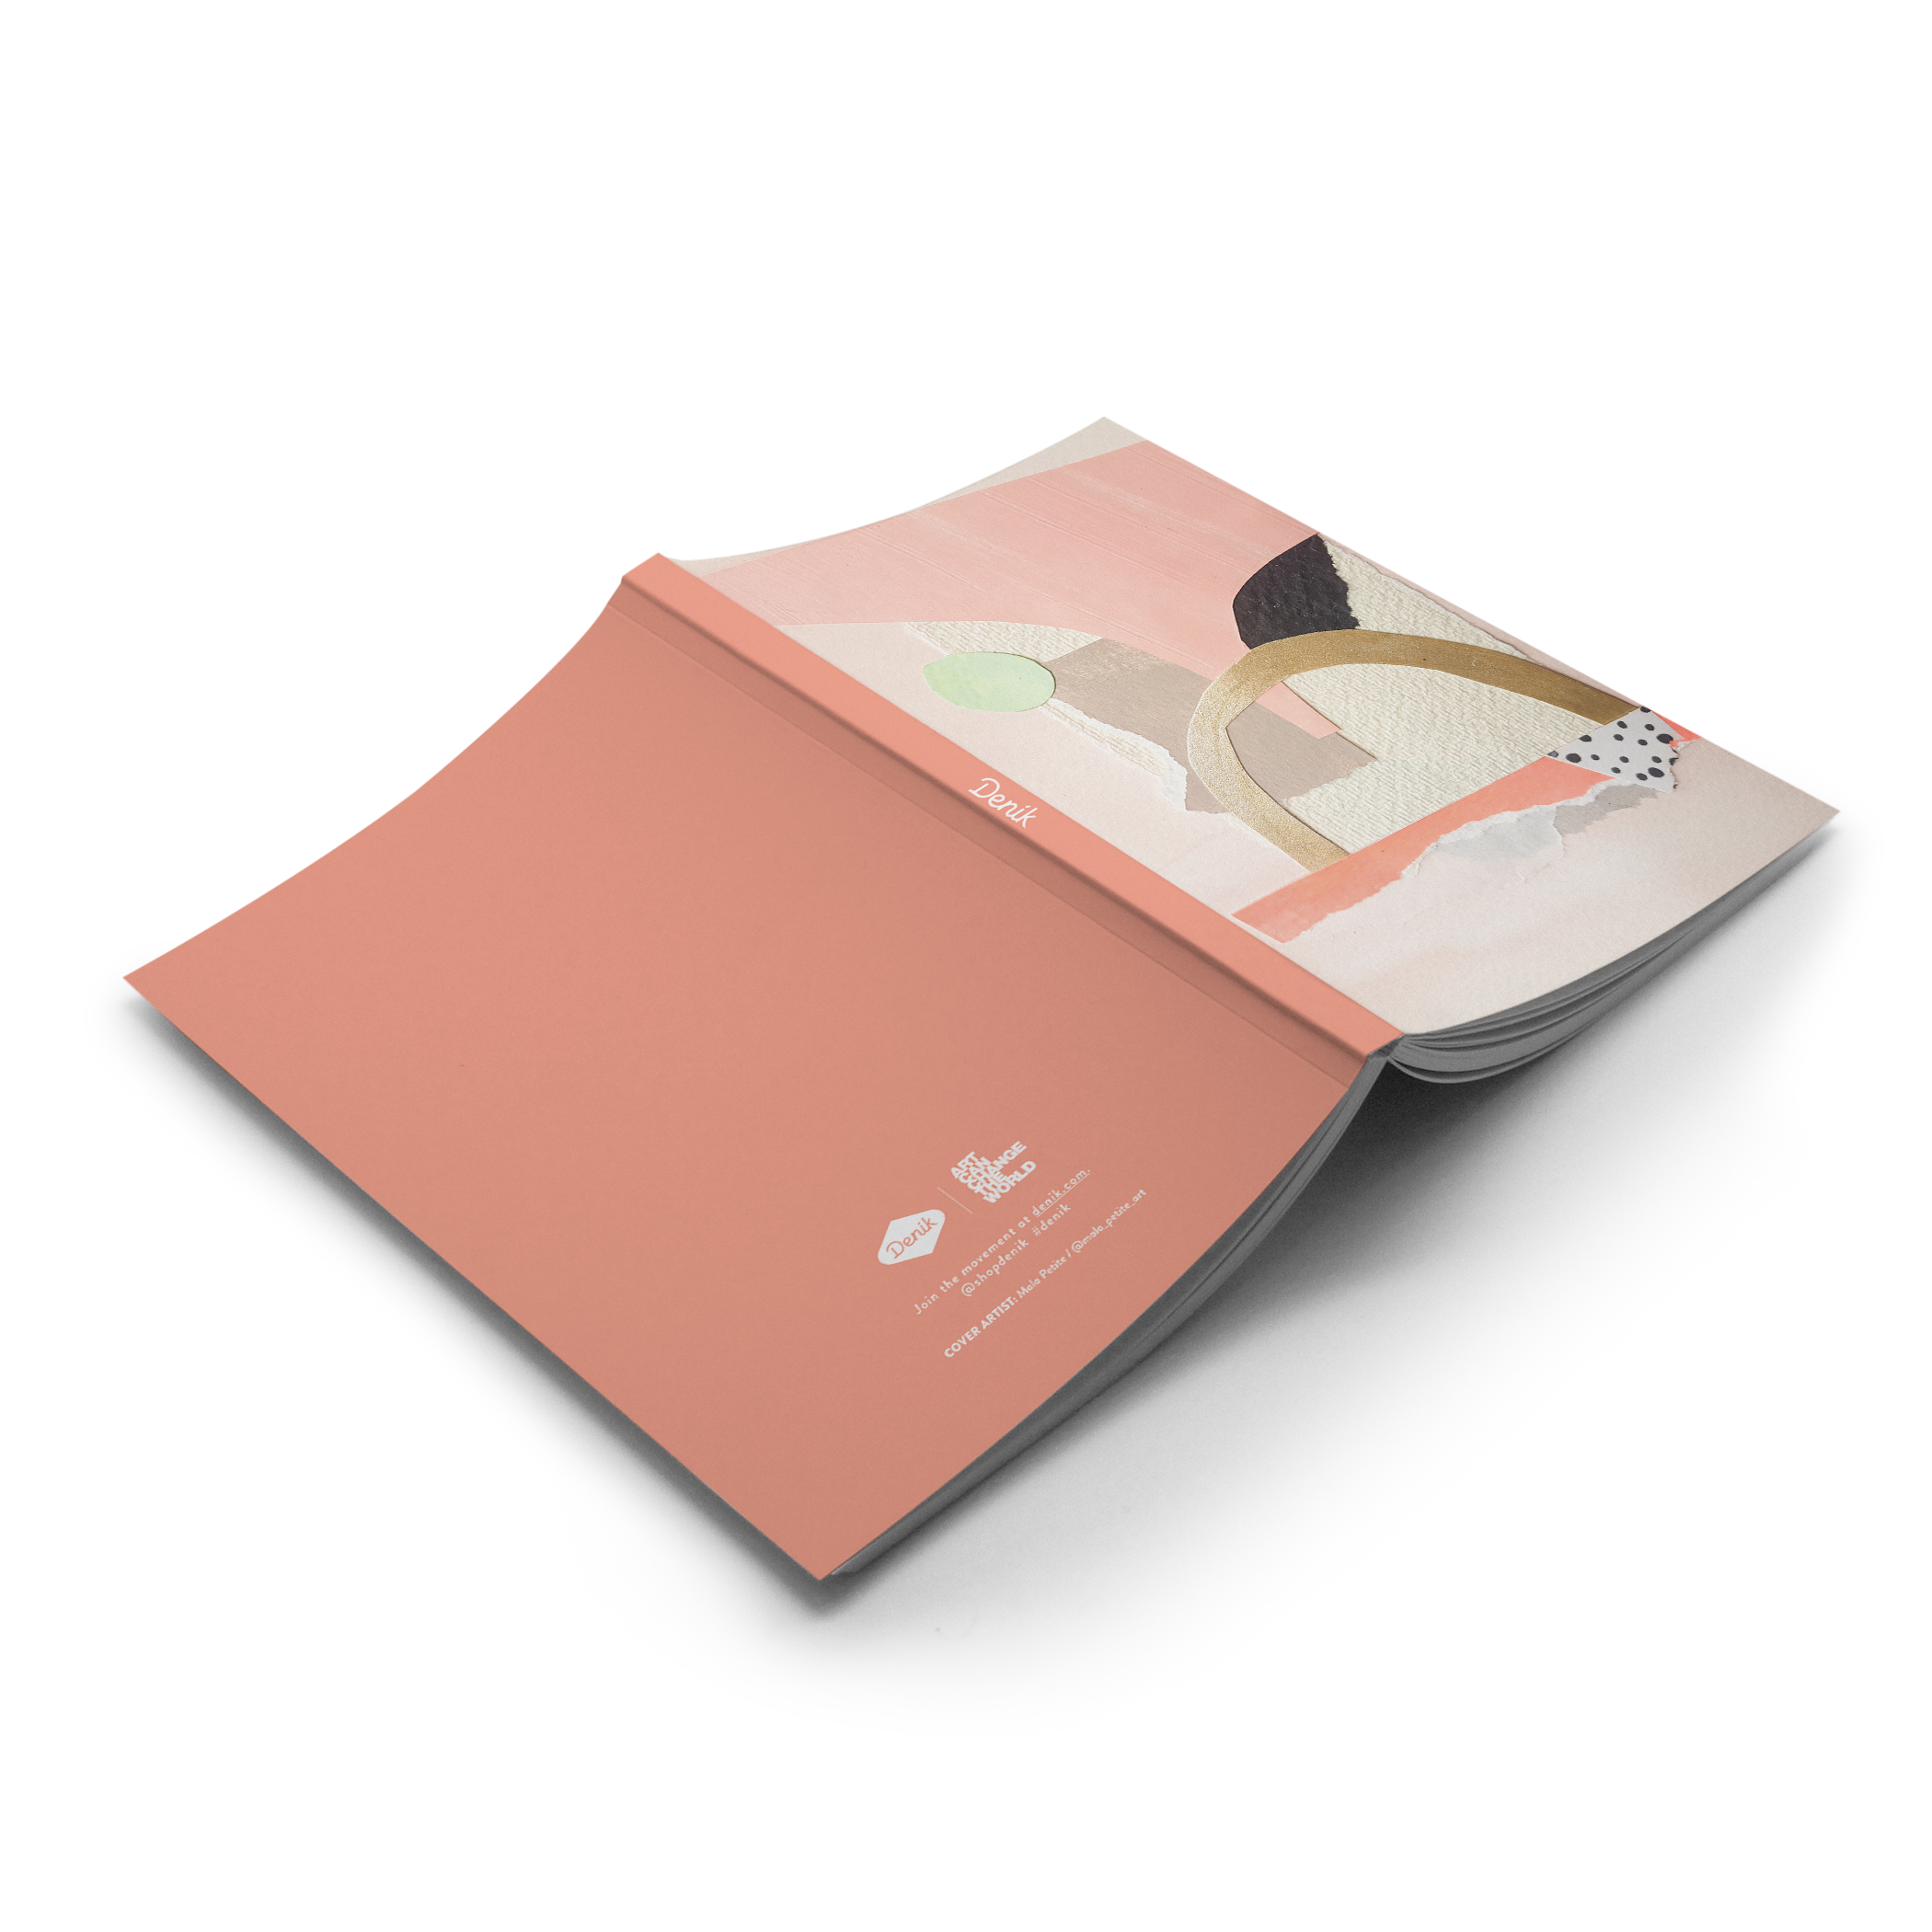 Lyra Notebook